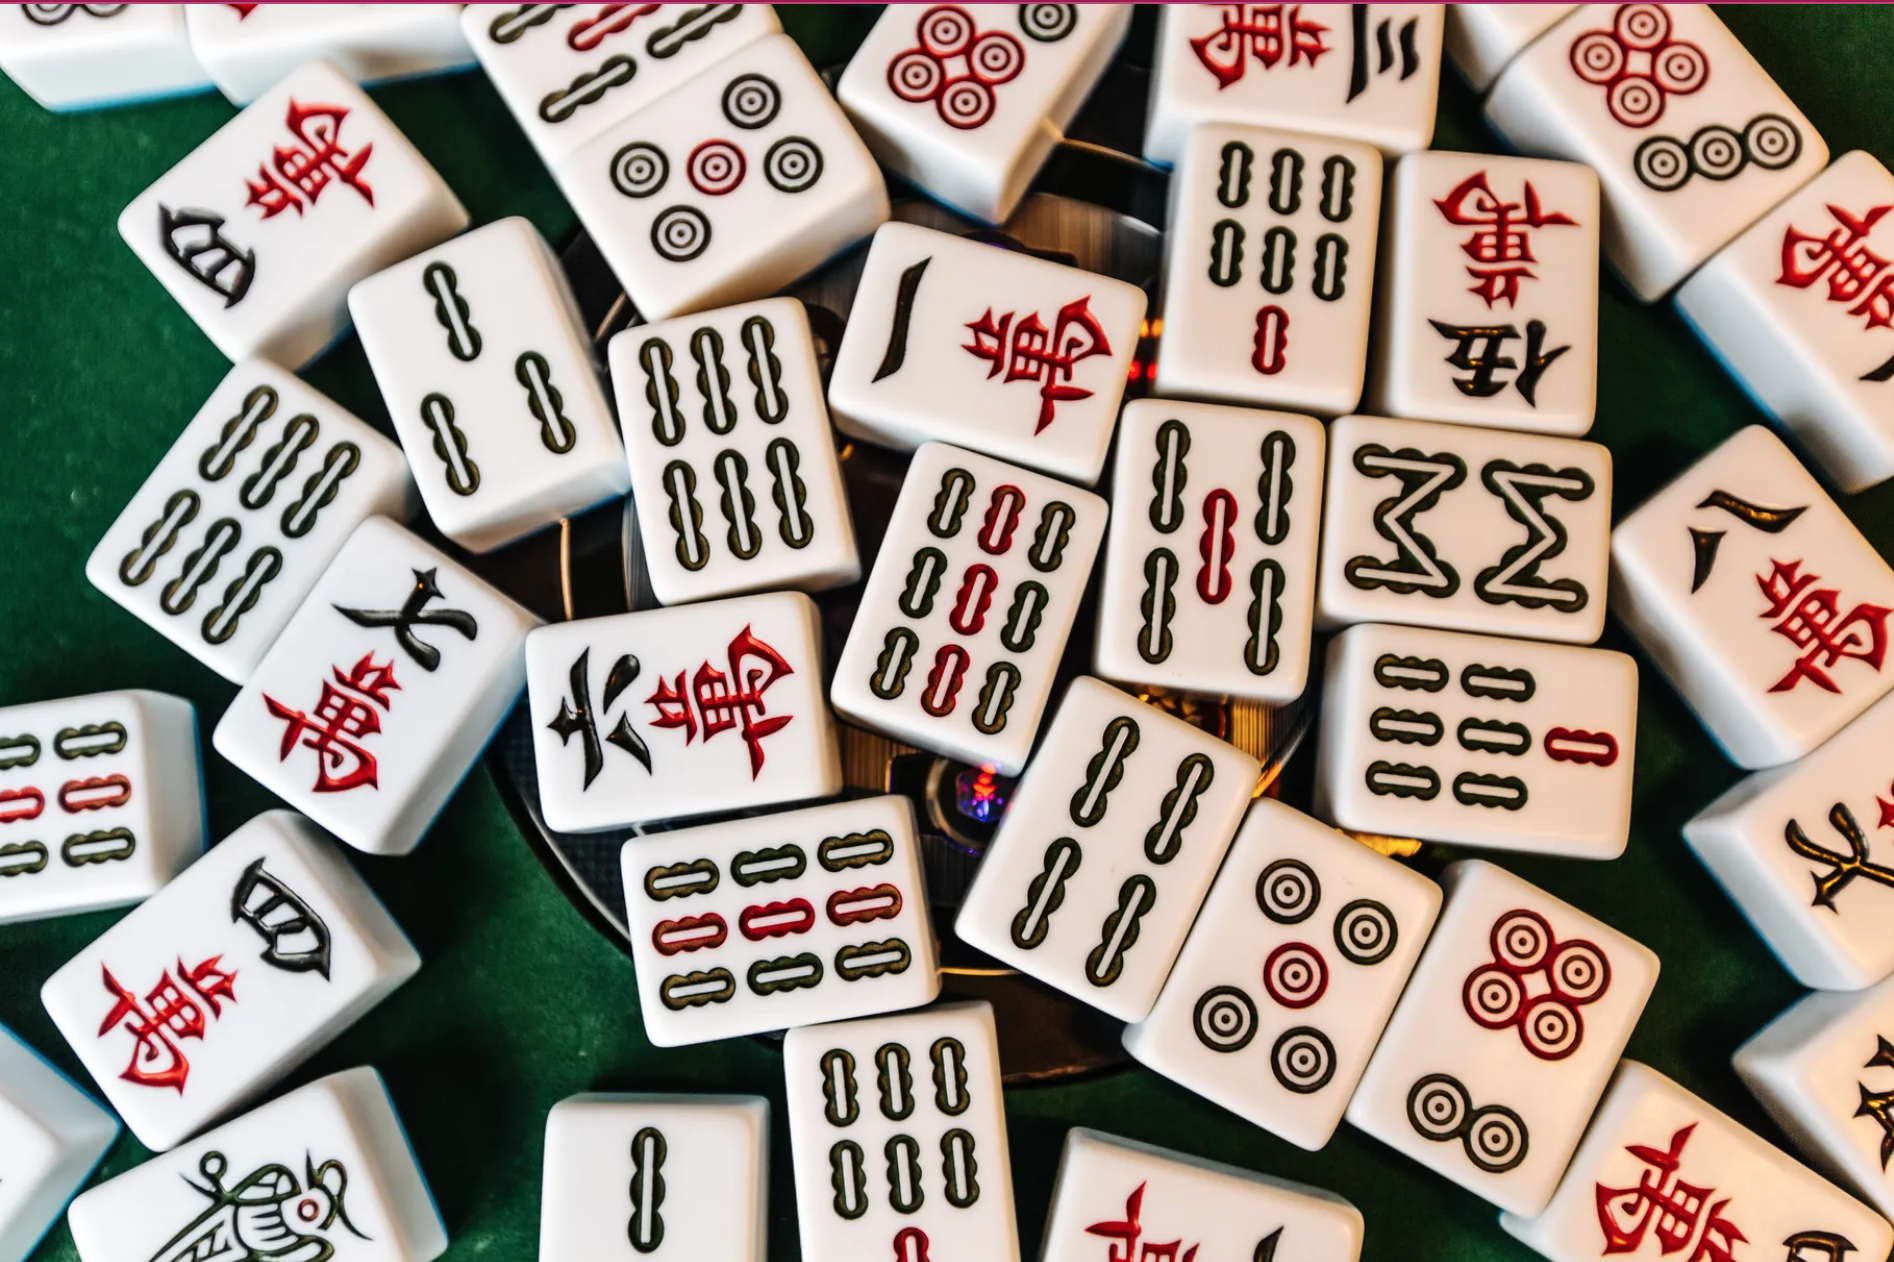 10 Mahjong - Jogo Online - Joga Agora